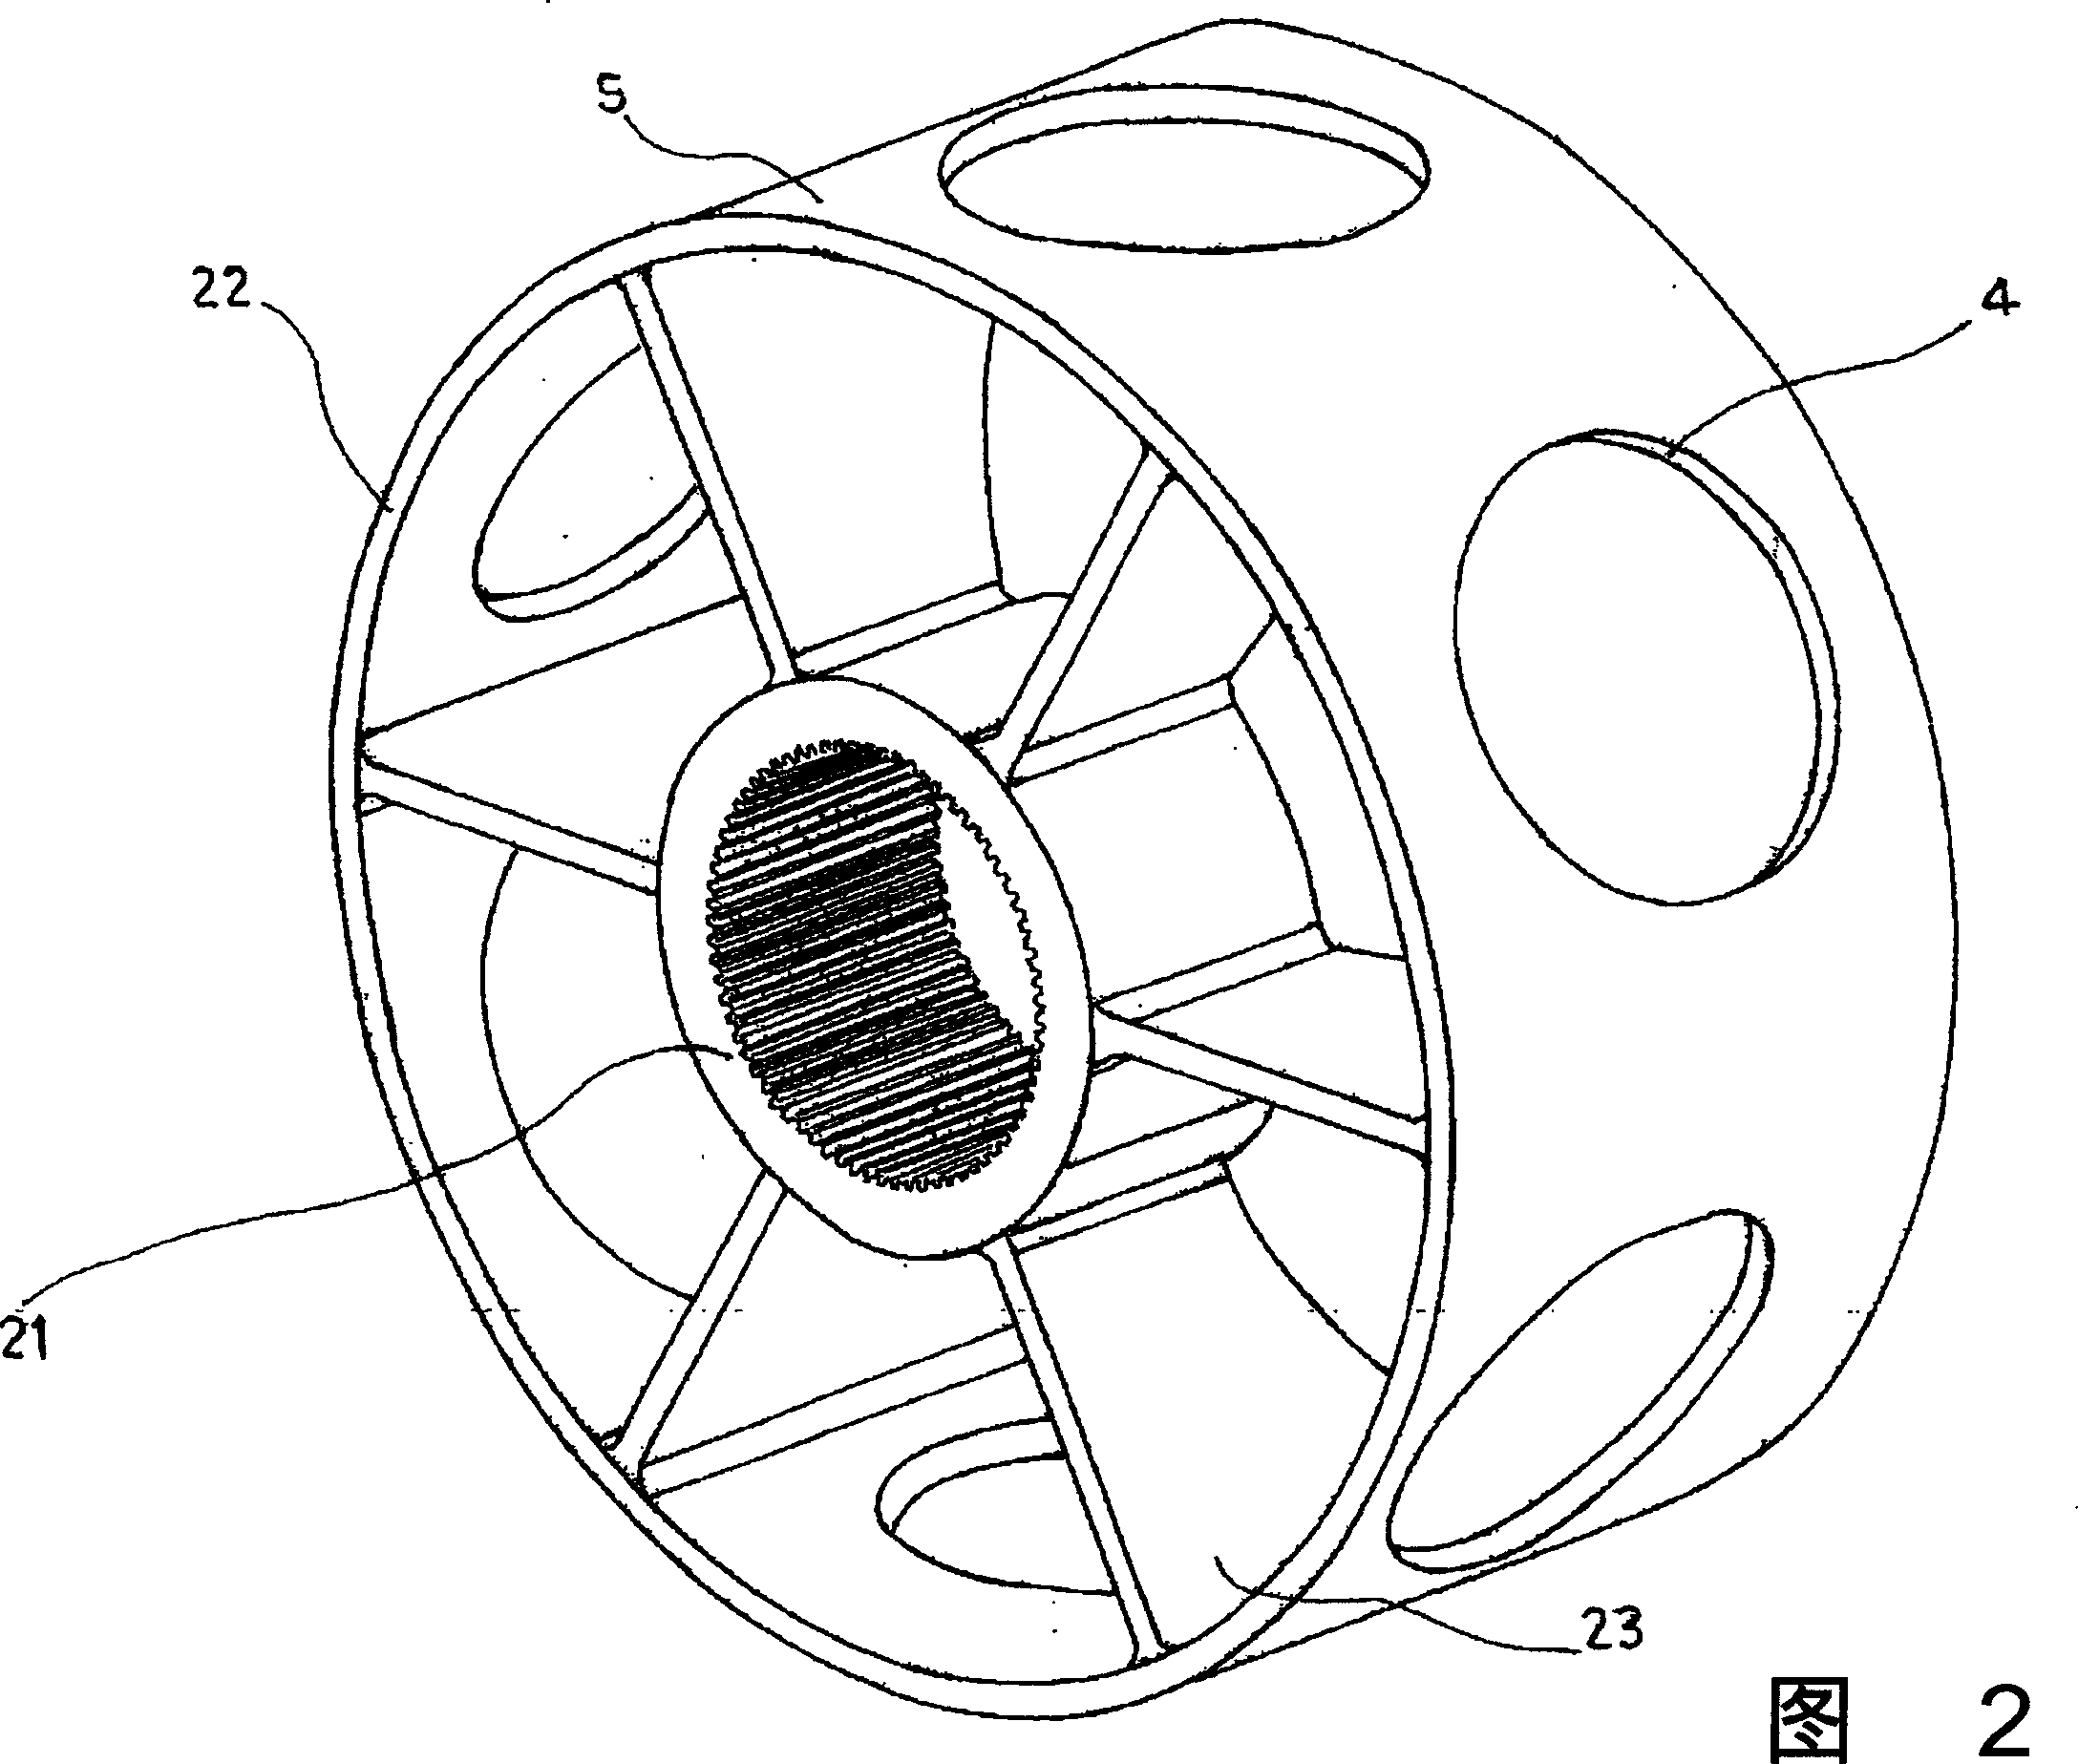 Boat propeller and method for assembling the same